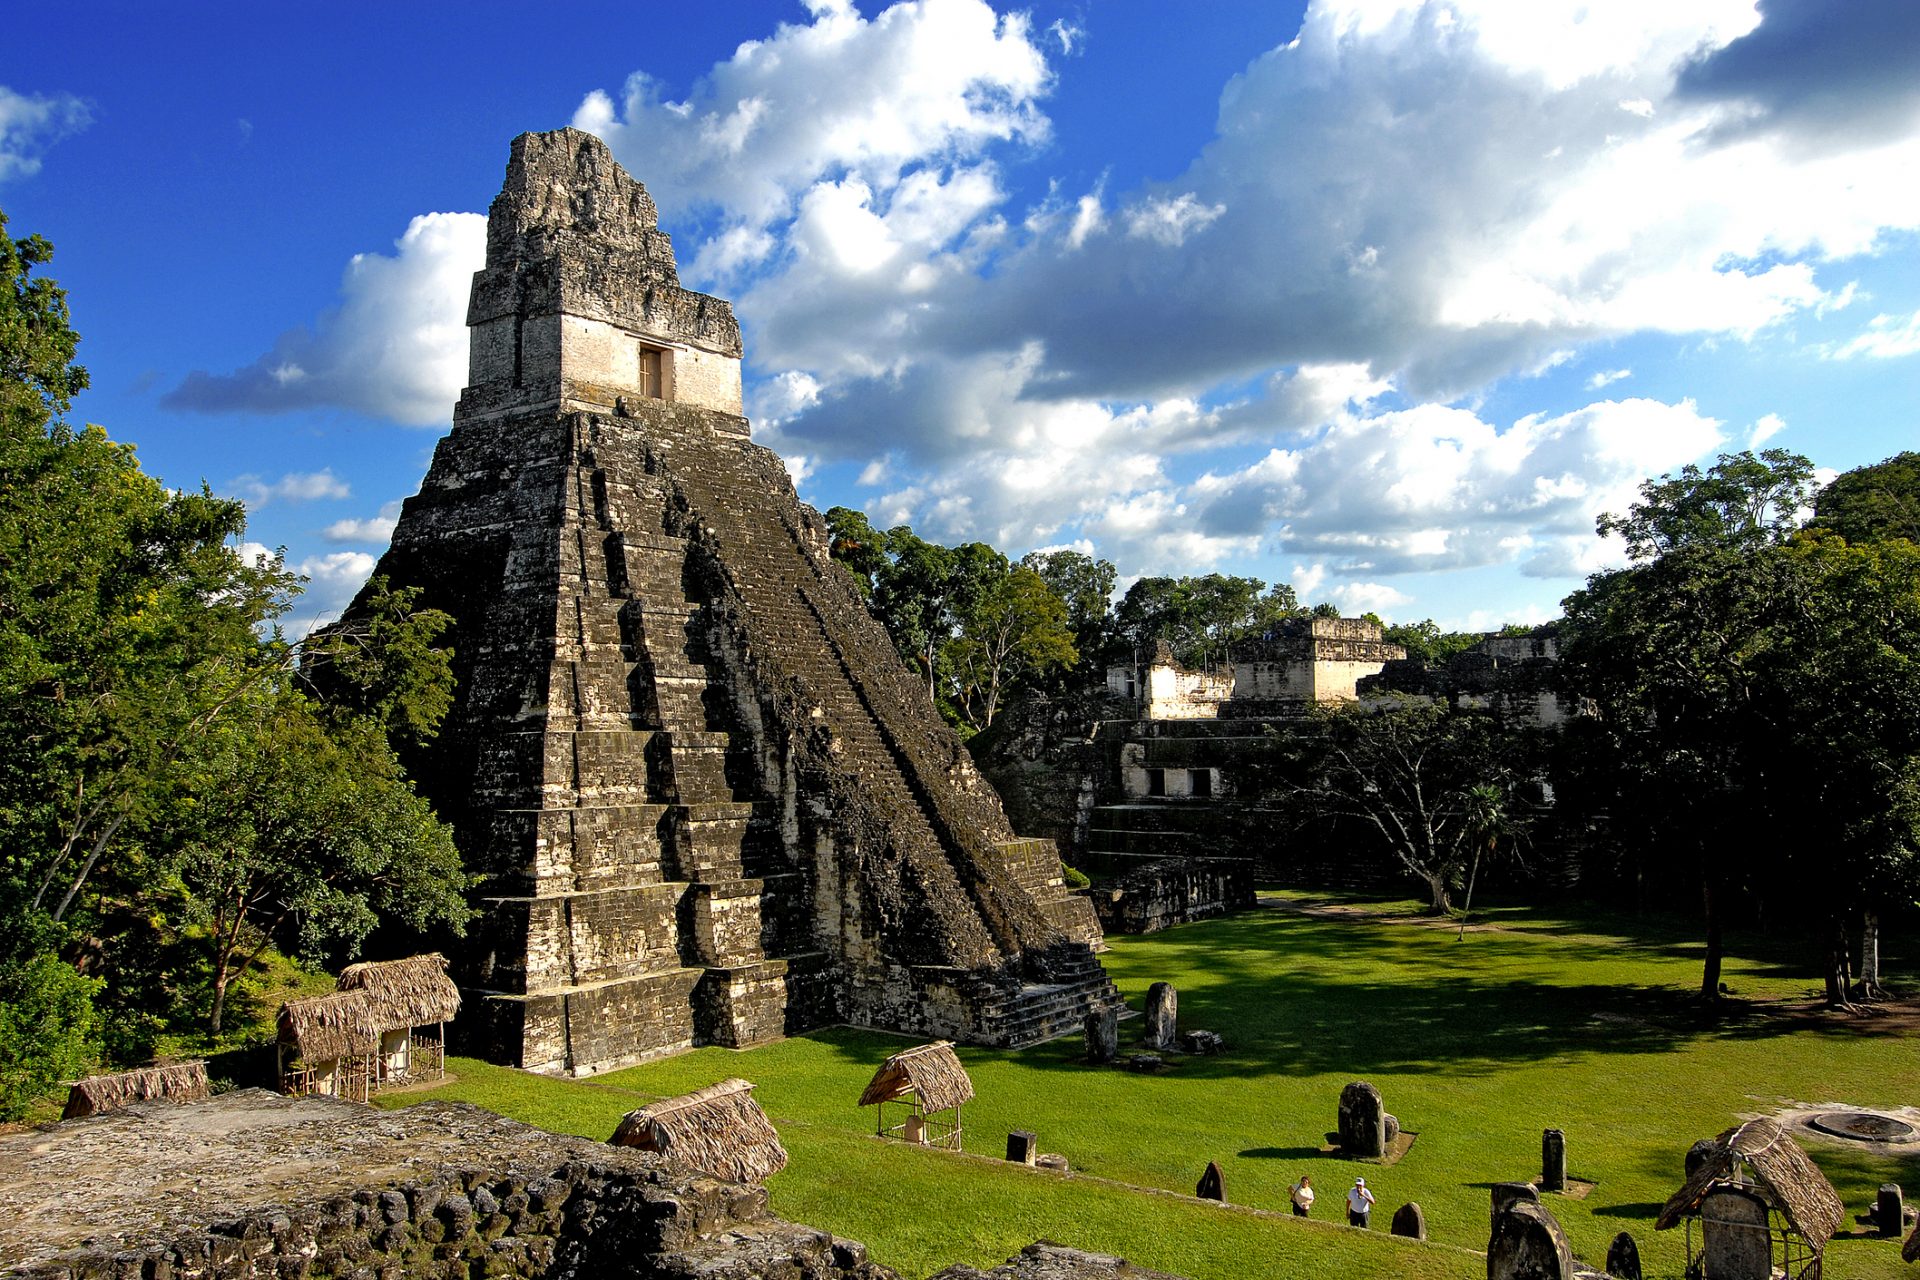 7. Tikal, Guatemala